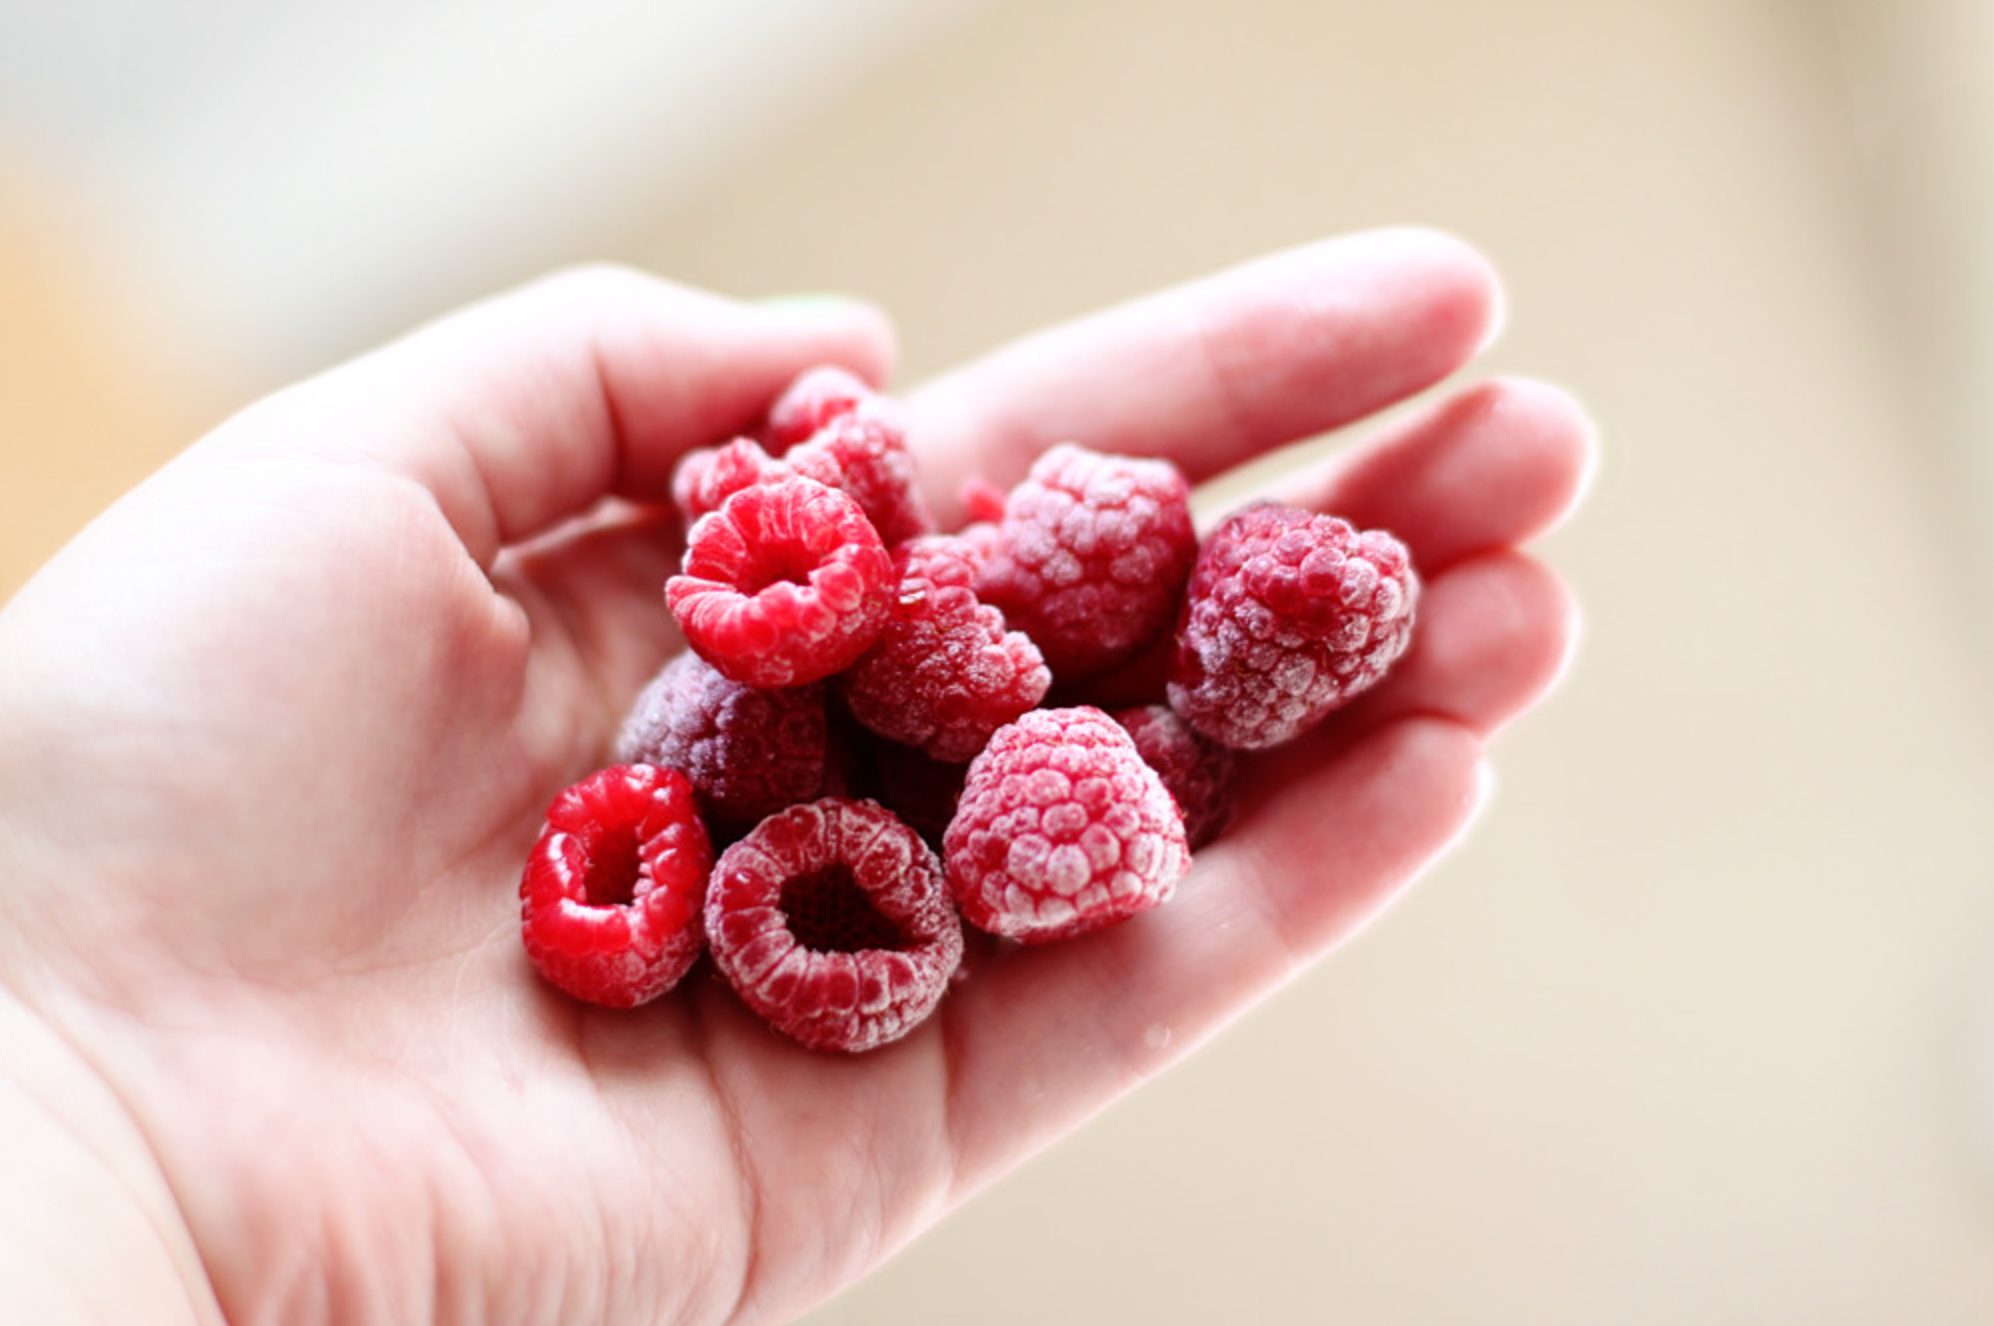 Frozen raspberries credit Abi Porter (CC BY 2.0)